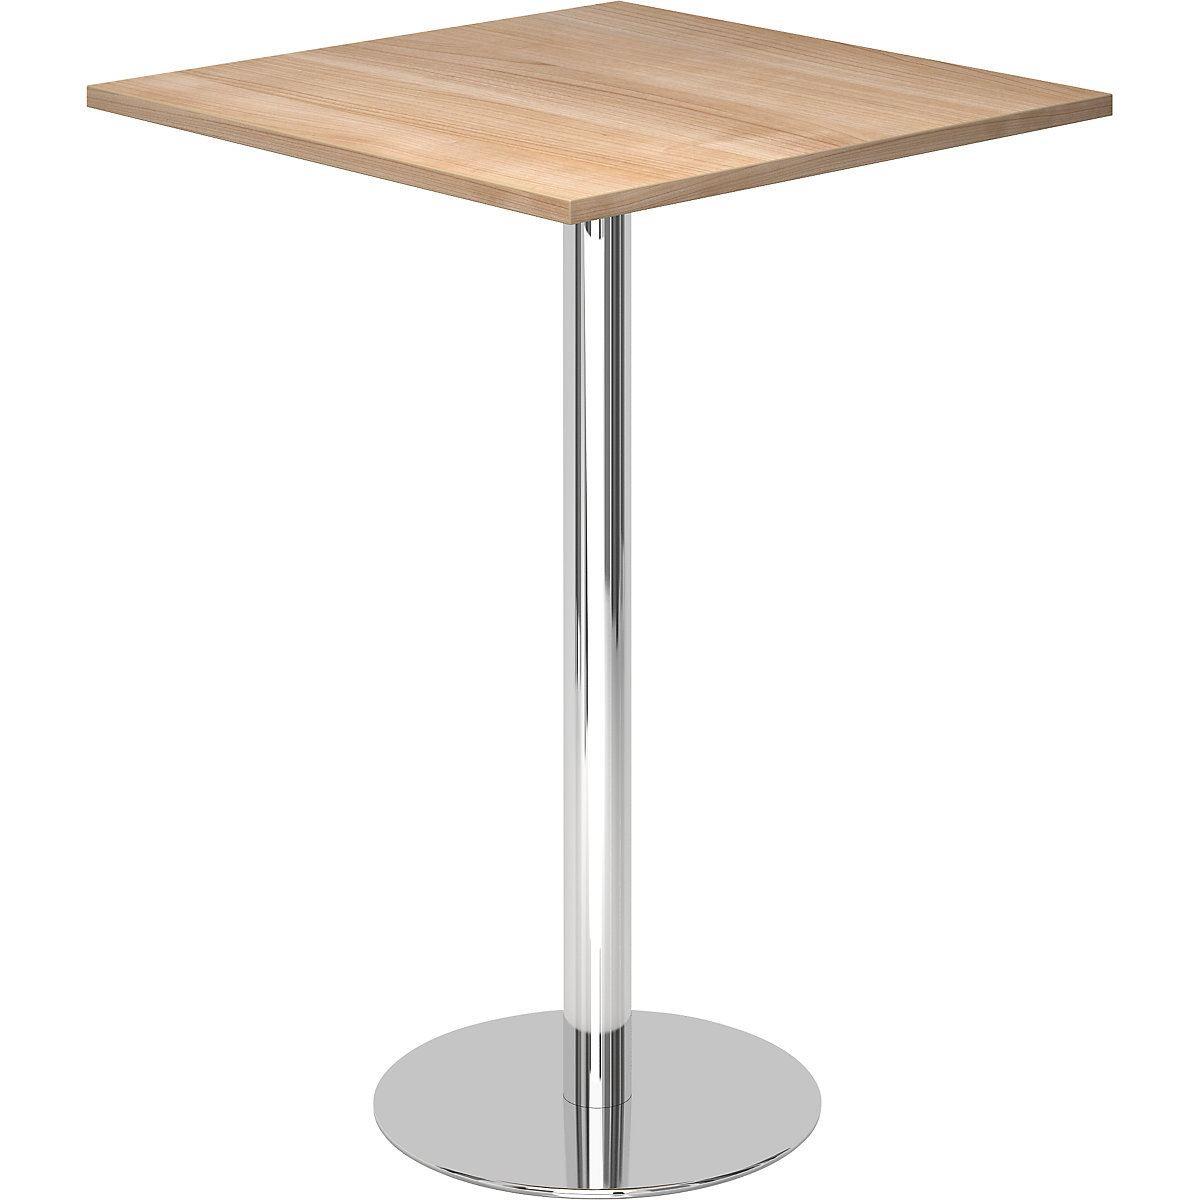 Visoki stol, DxŠ 800 x 800 mm, visina 1116 mm, kromirano postolje, ploča u imitaciji drva oraha-6